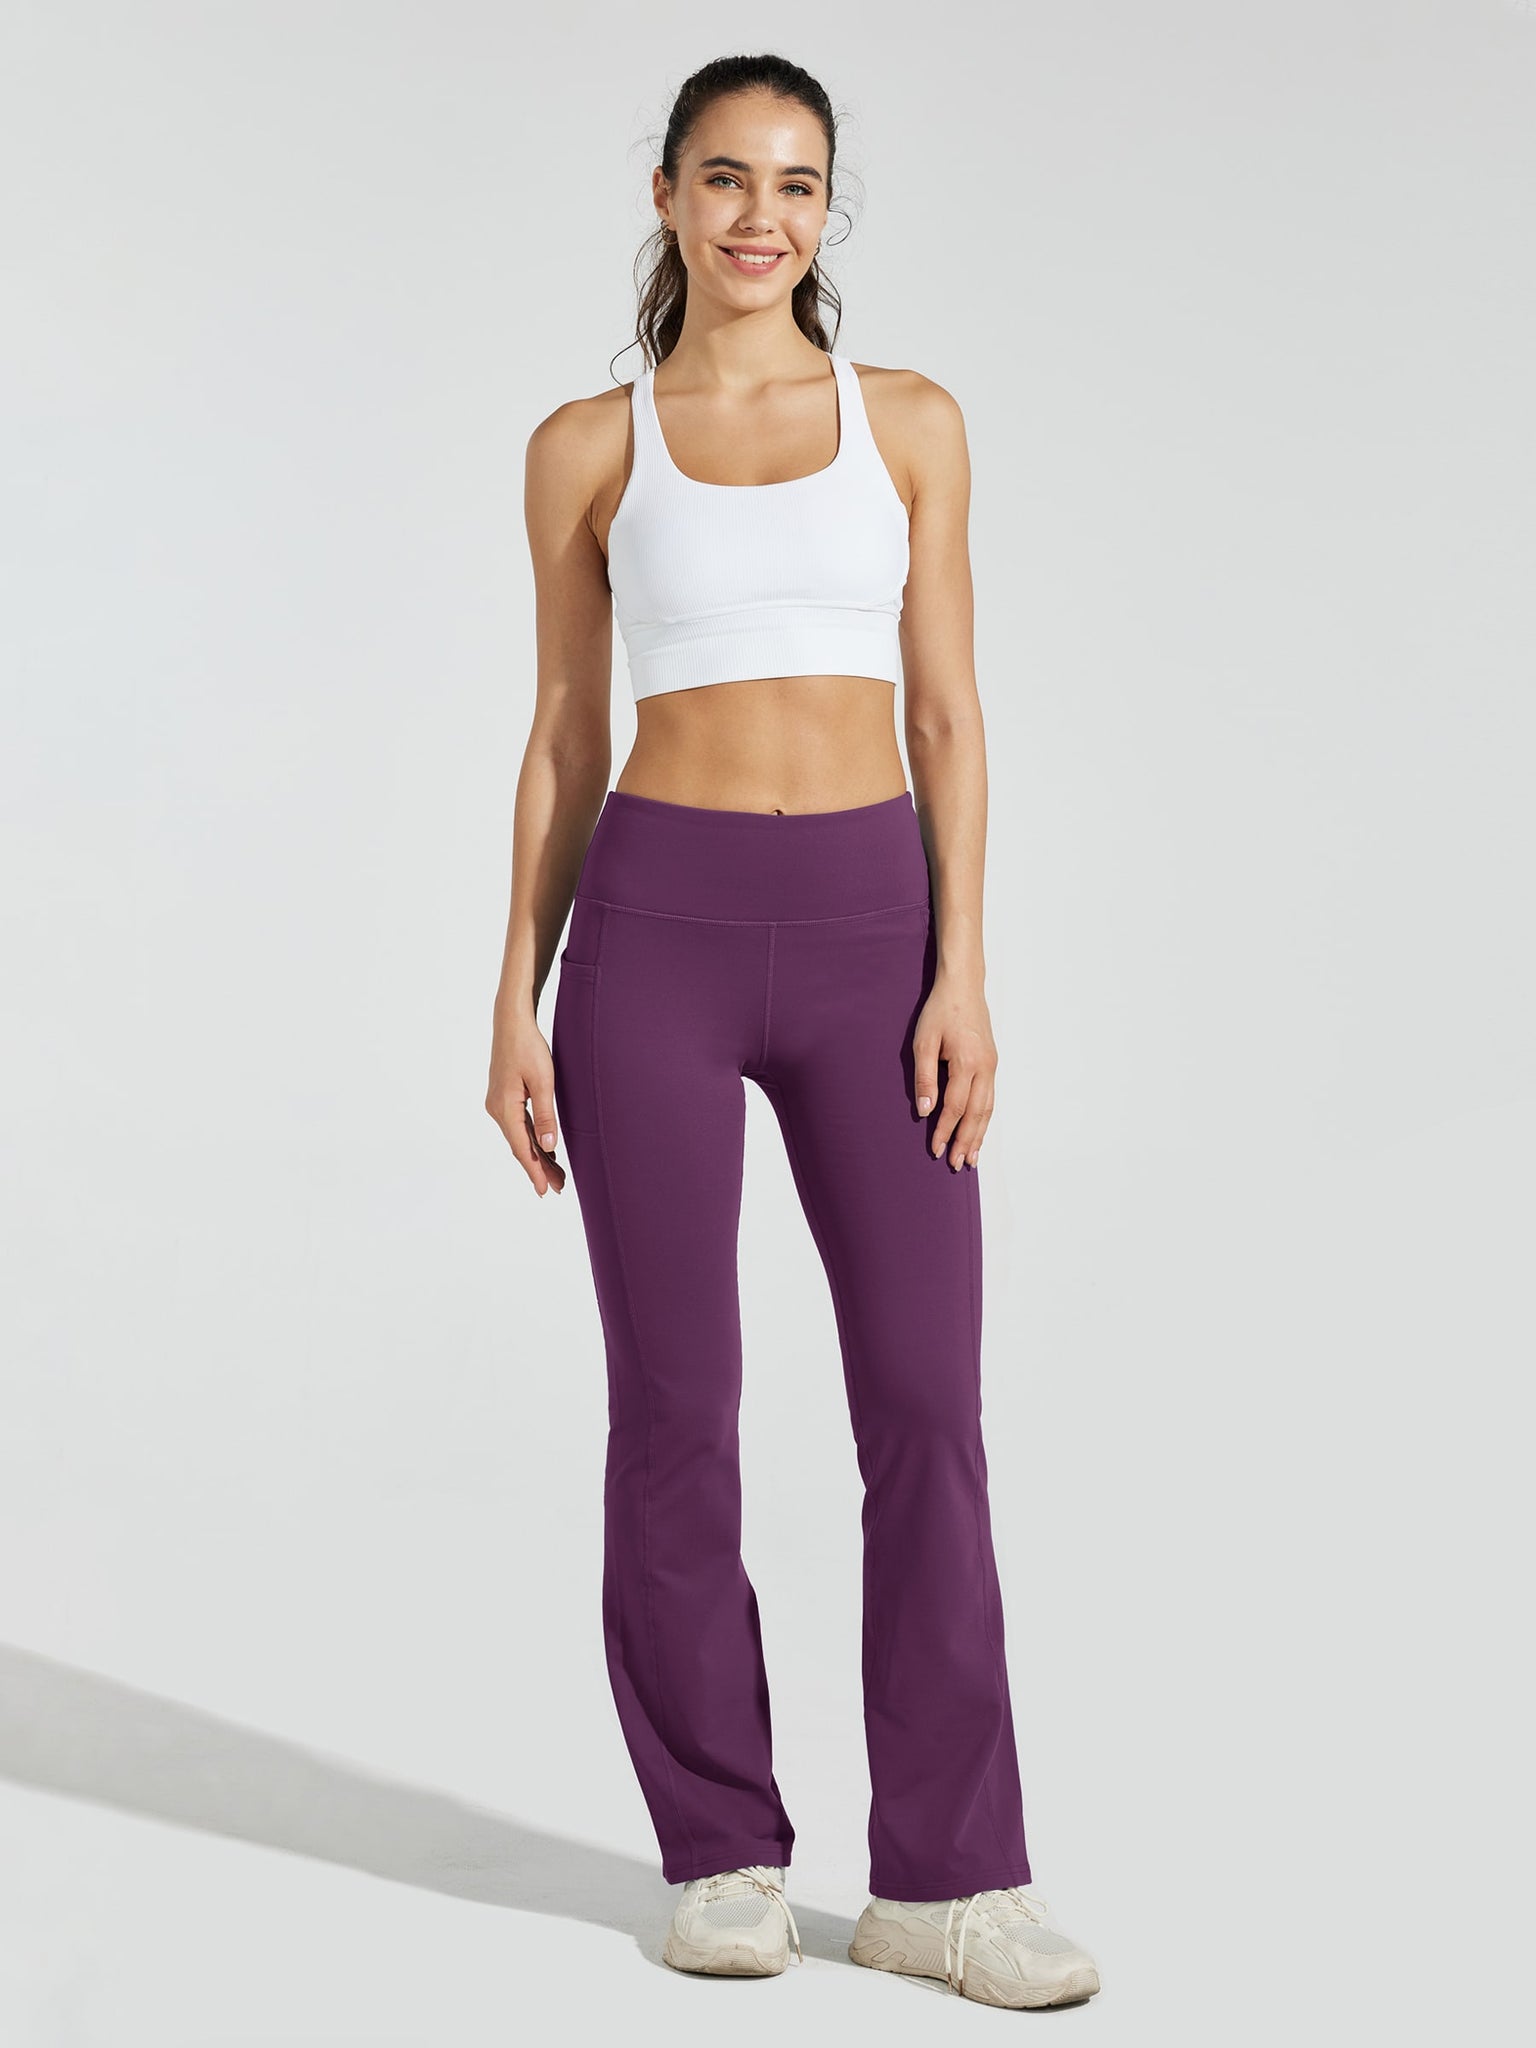 Women's Fleece Lined Bootcut Yoga Pants_Purple_model5